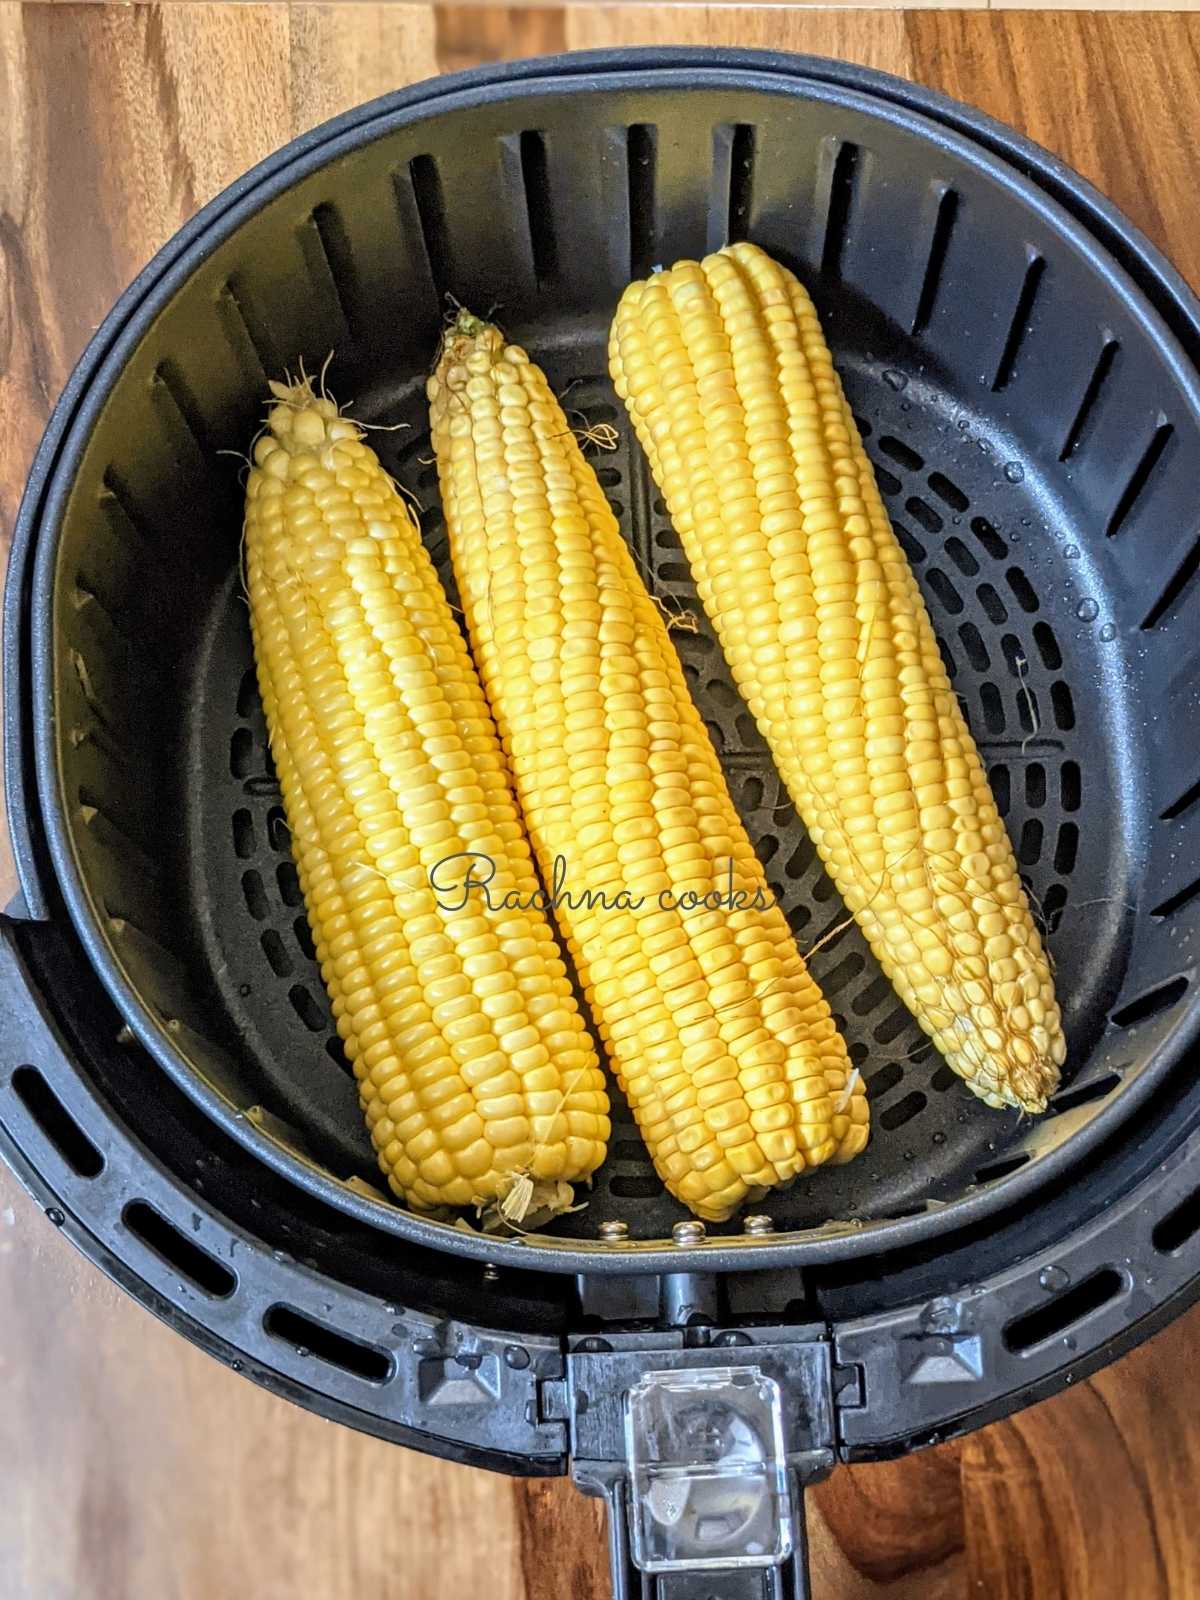 corn placed in air fryer basket